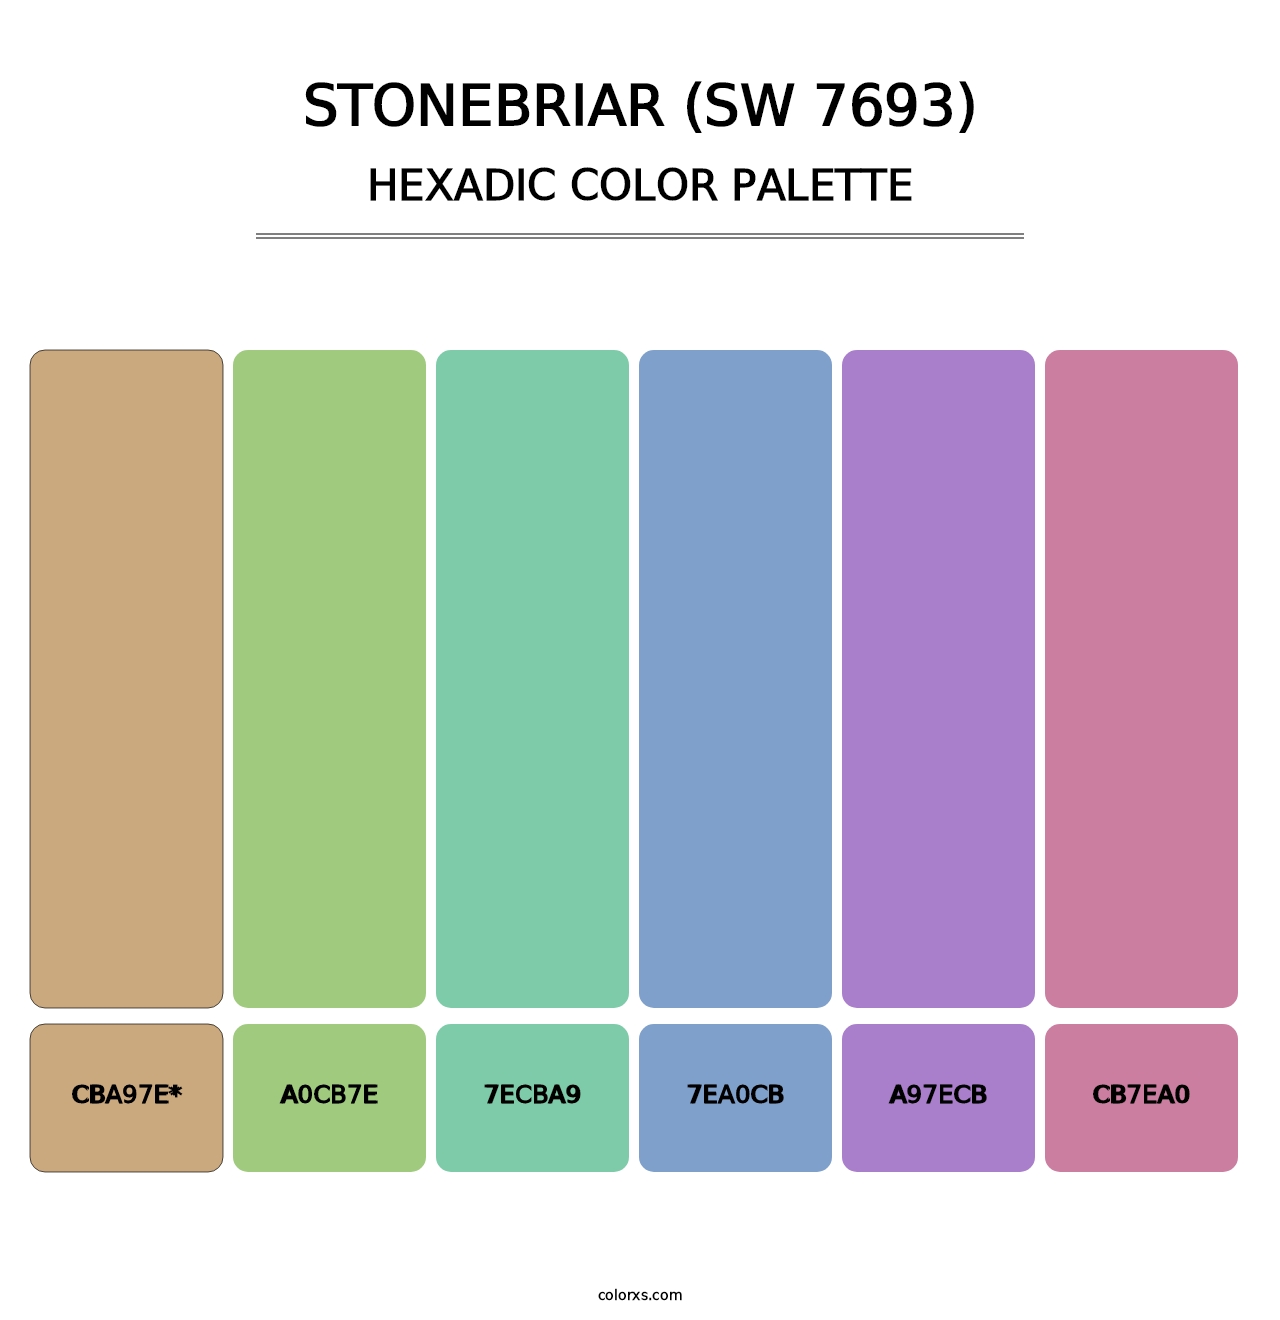 Stonebriar (SW 7693) - Hexadic Color Palette